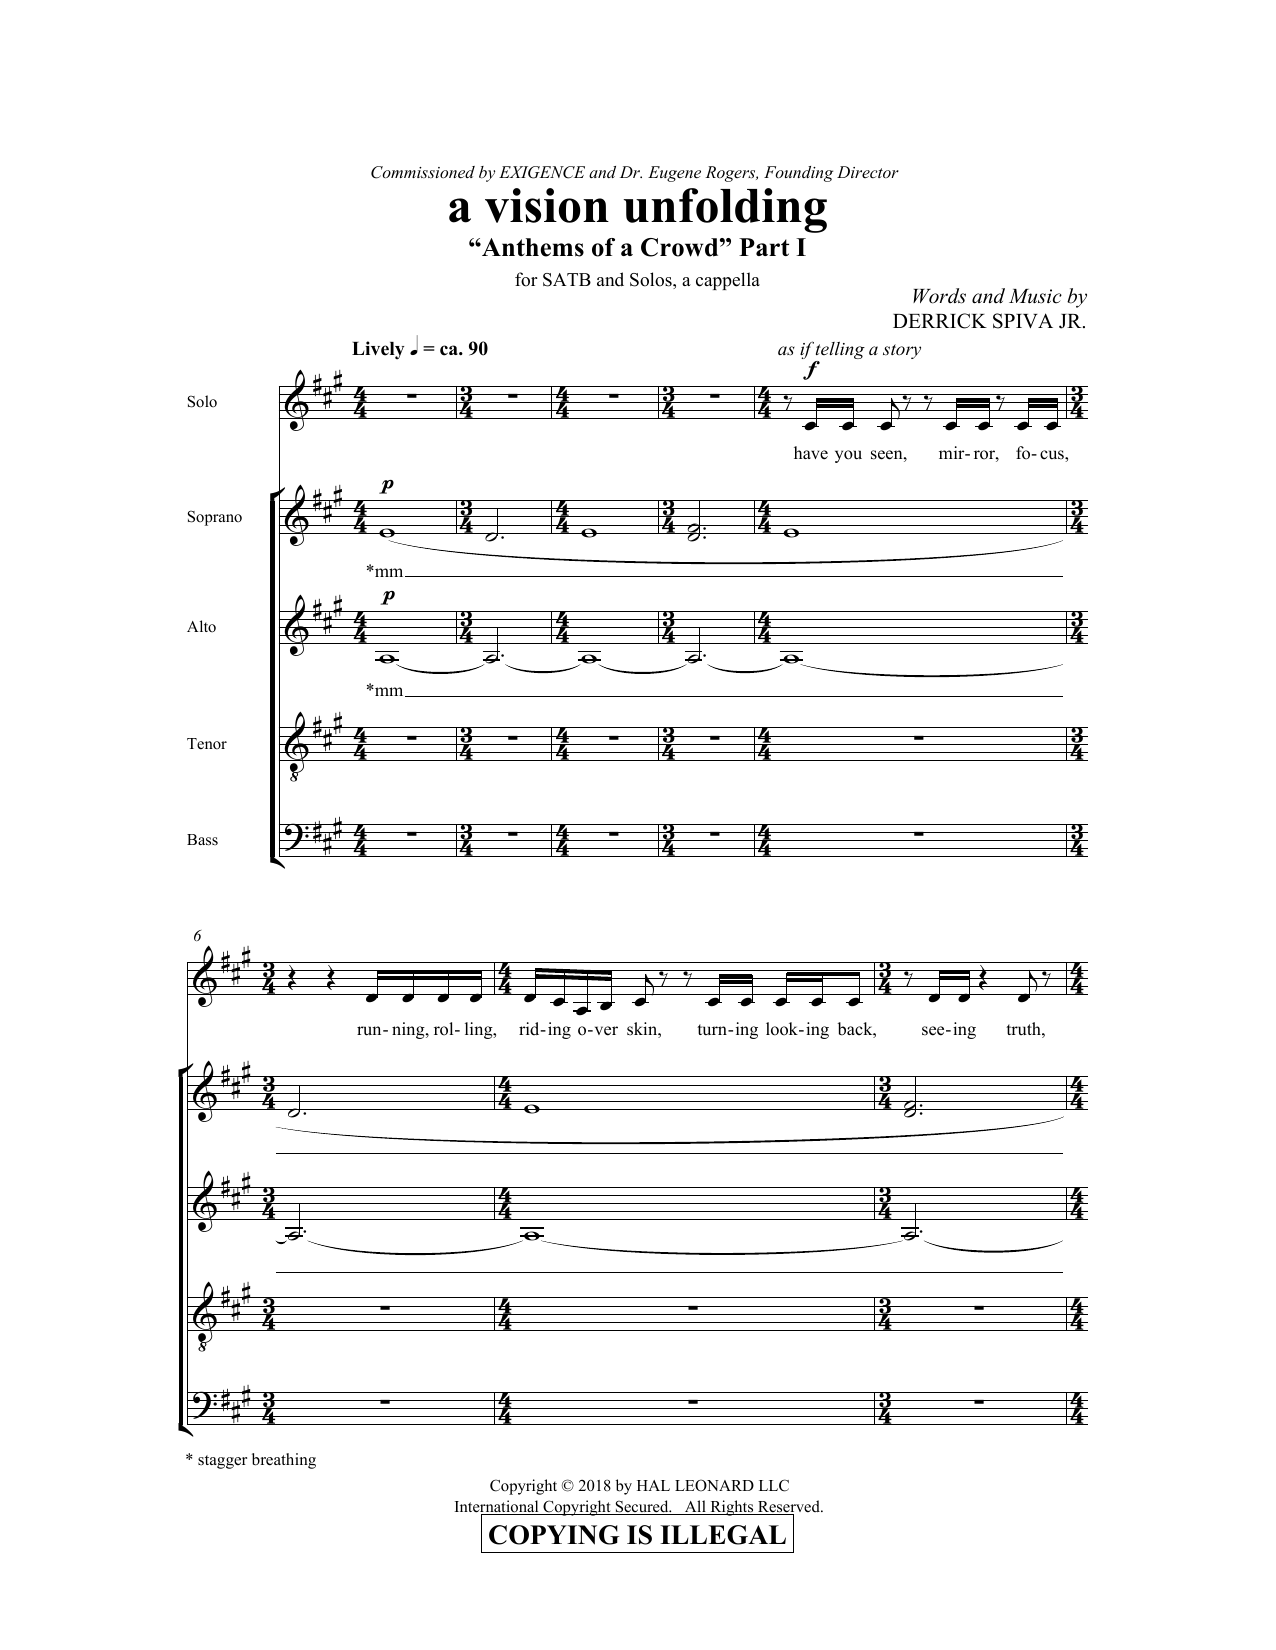 Derrick Spiva Vision Unfolding Sheet Music Notes & Chords for SATB Choir - Download or Print PDF